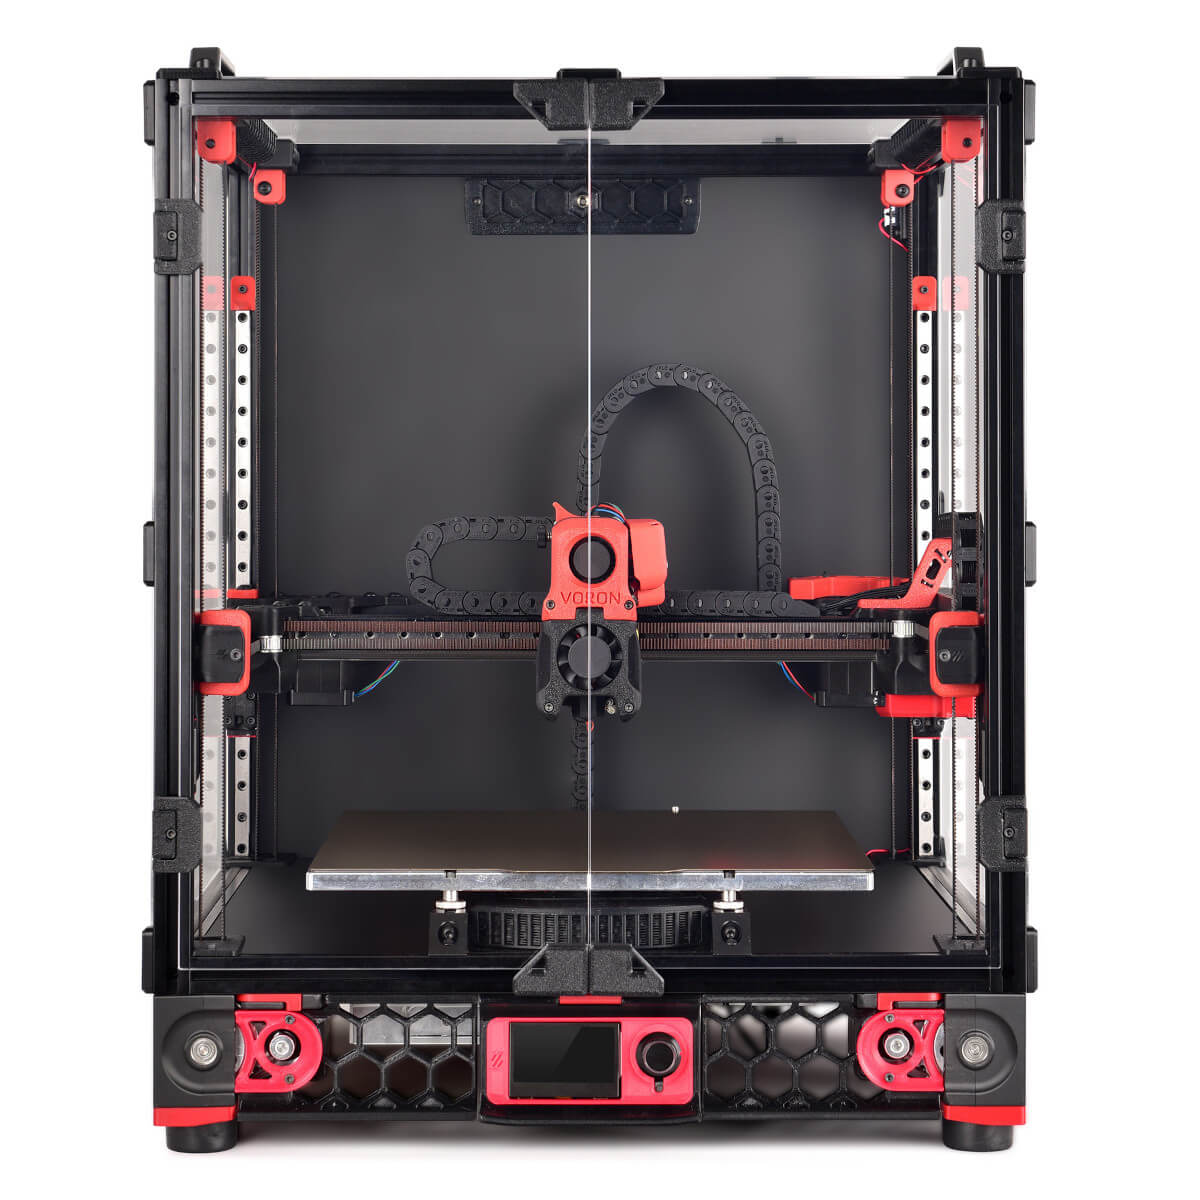 Voron 2.4 3D Printer Kit by LDO